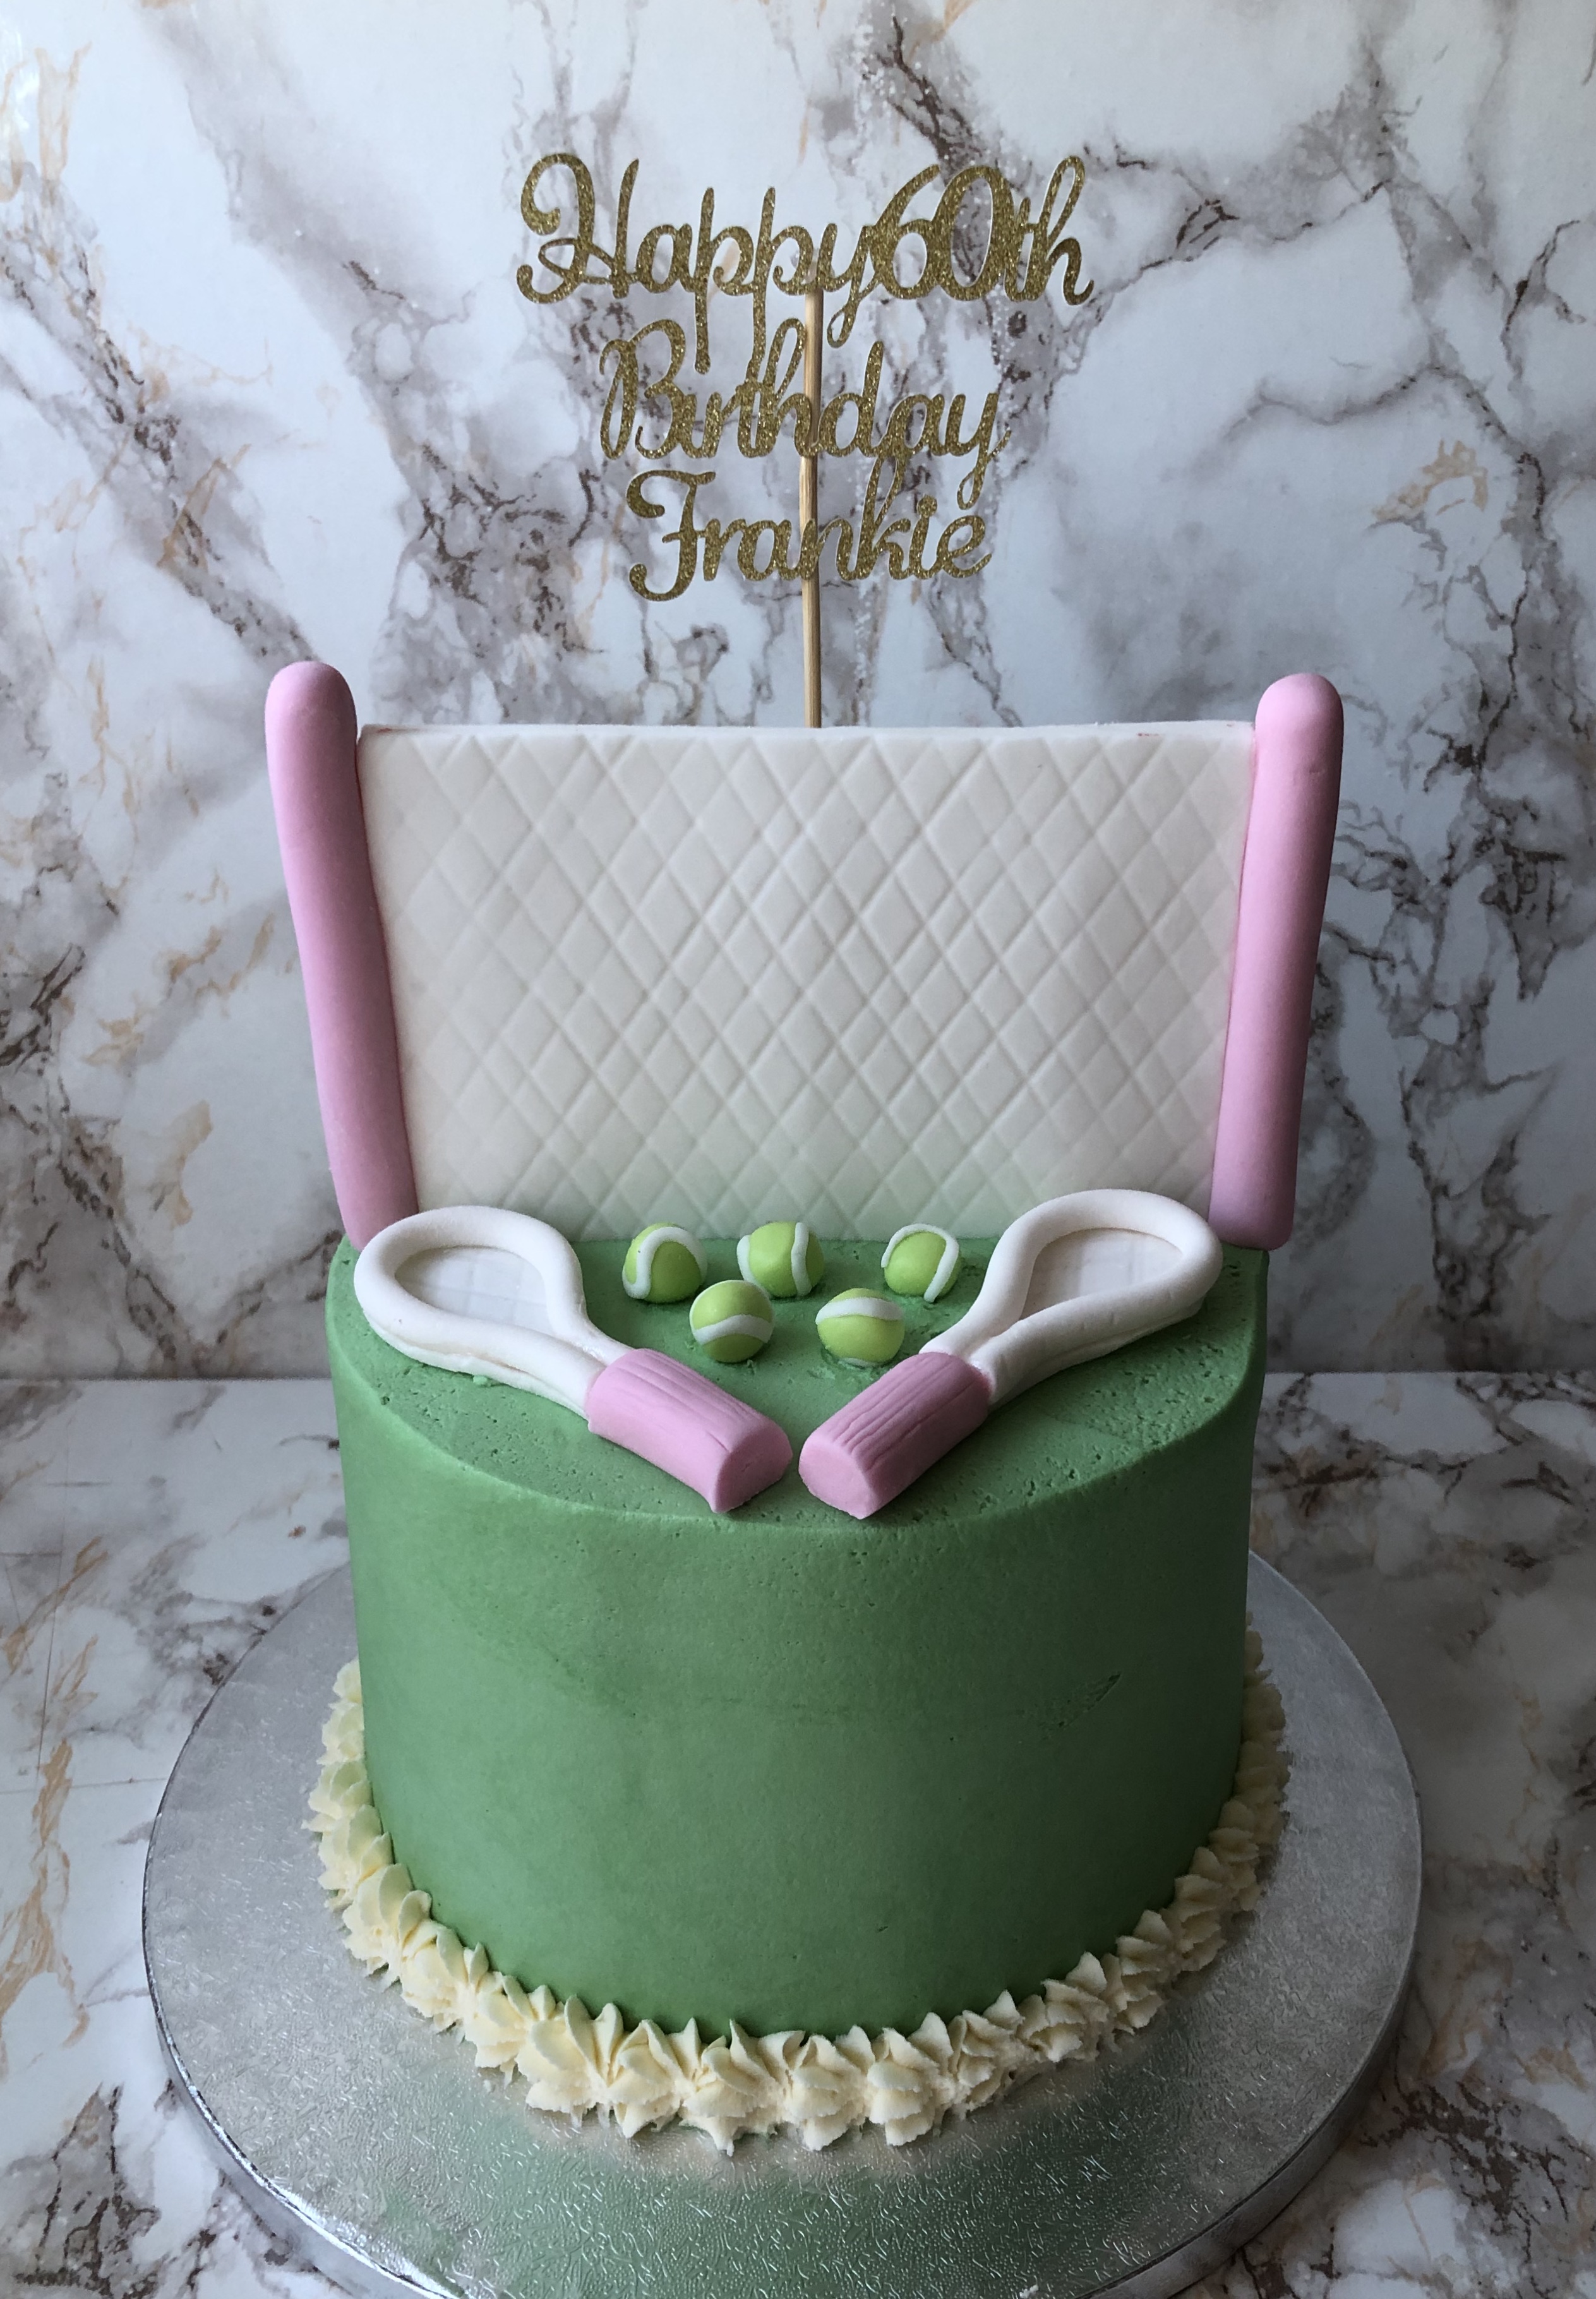 Birthday Cake With Name